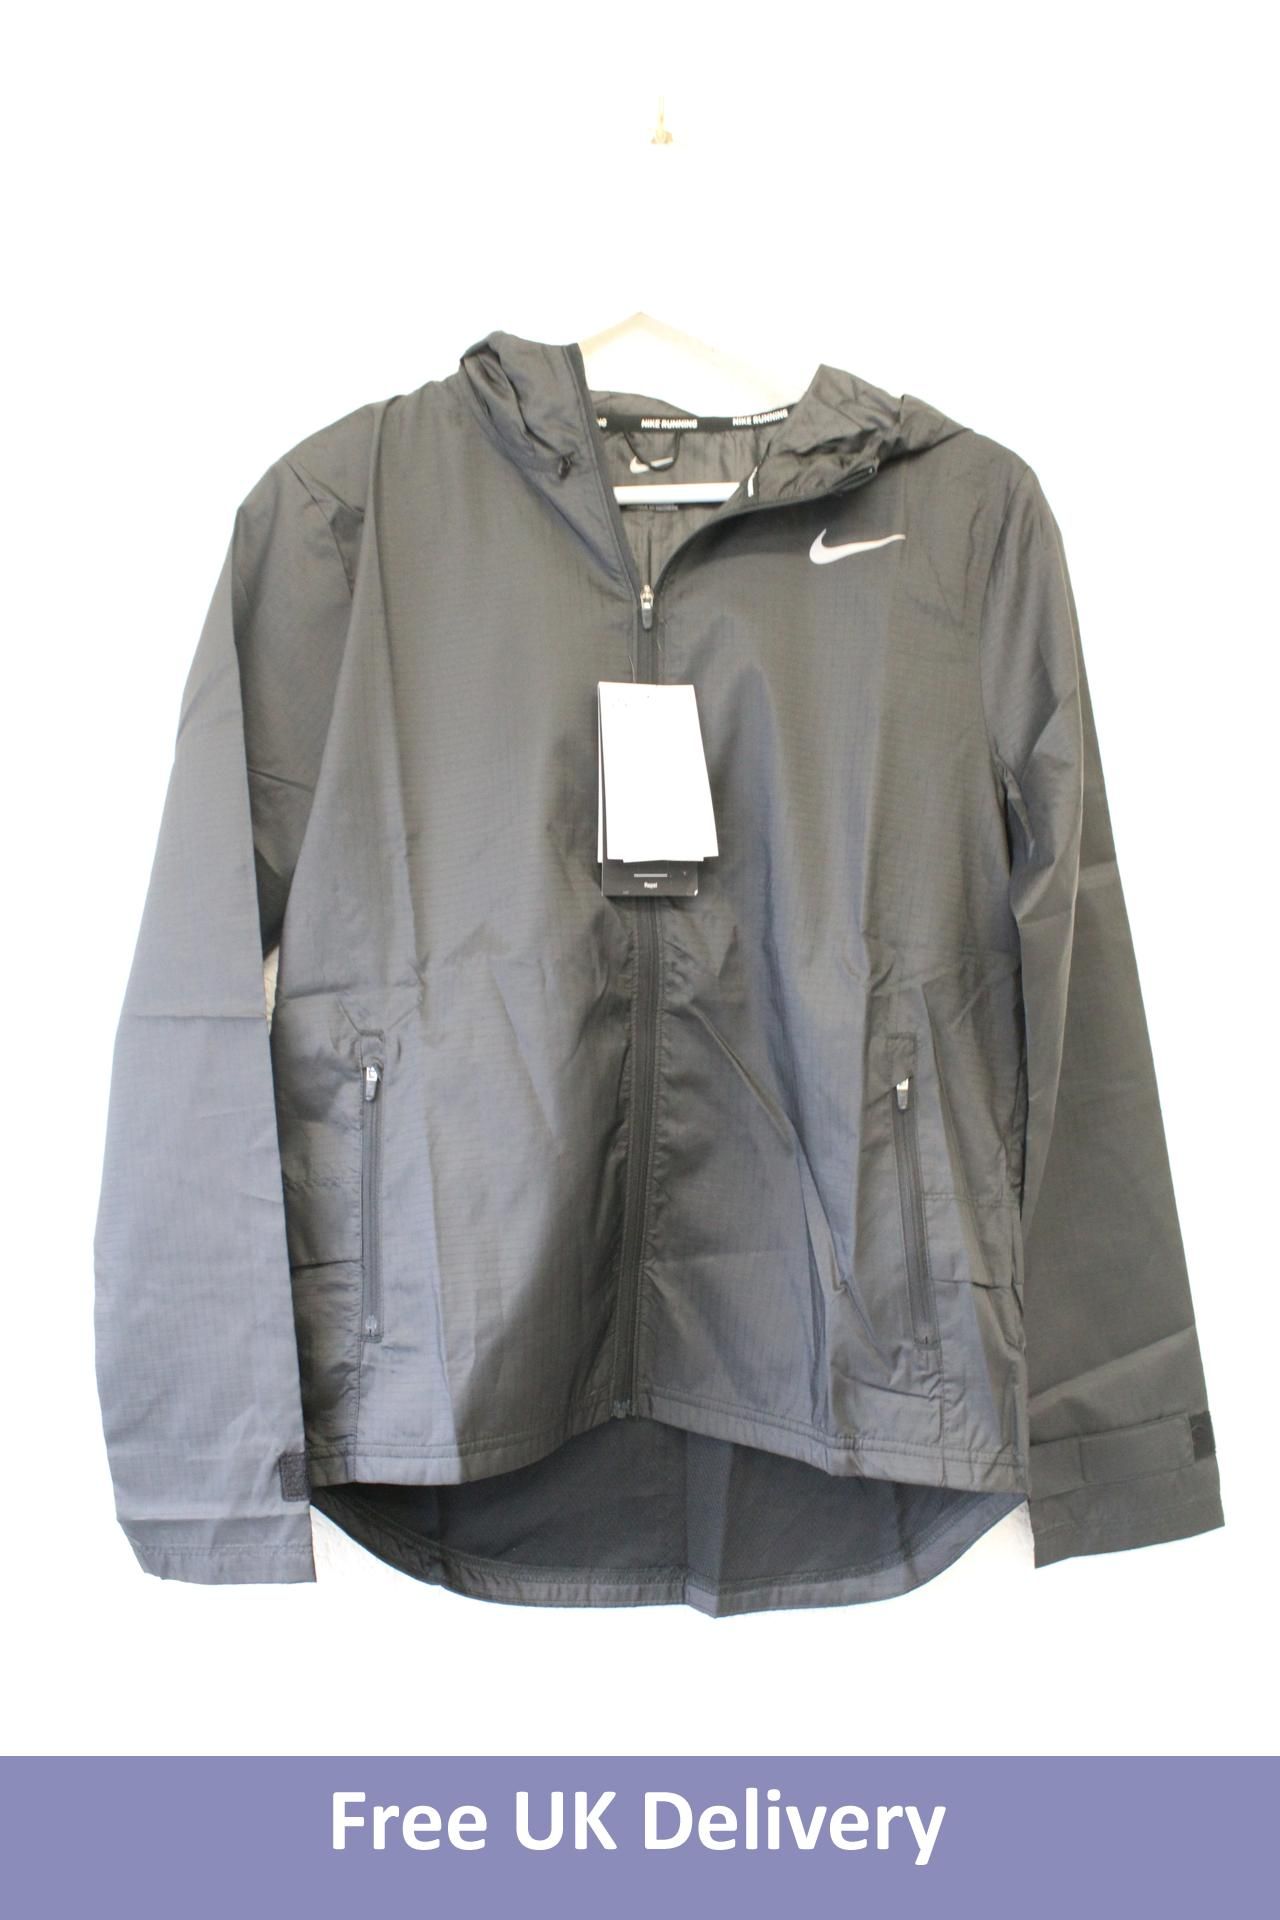 Nike Women's Essential Running Jacket, Black, Size S/P